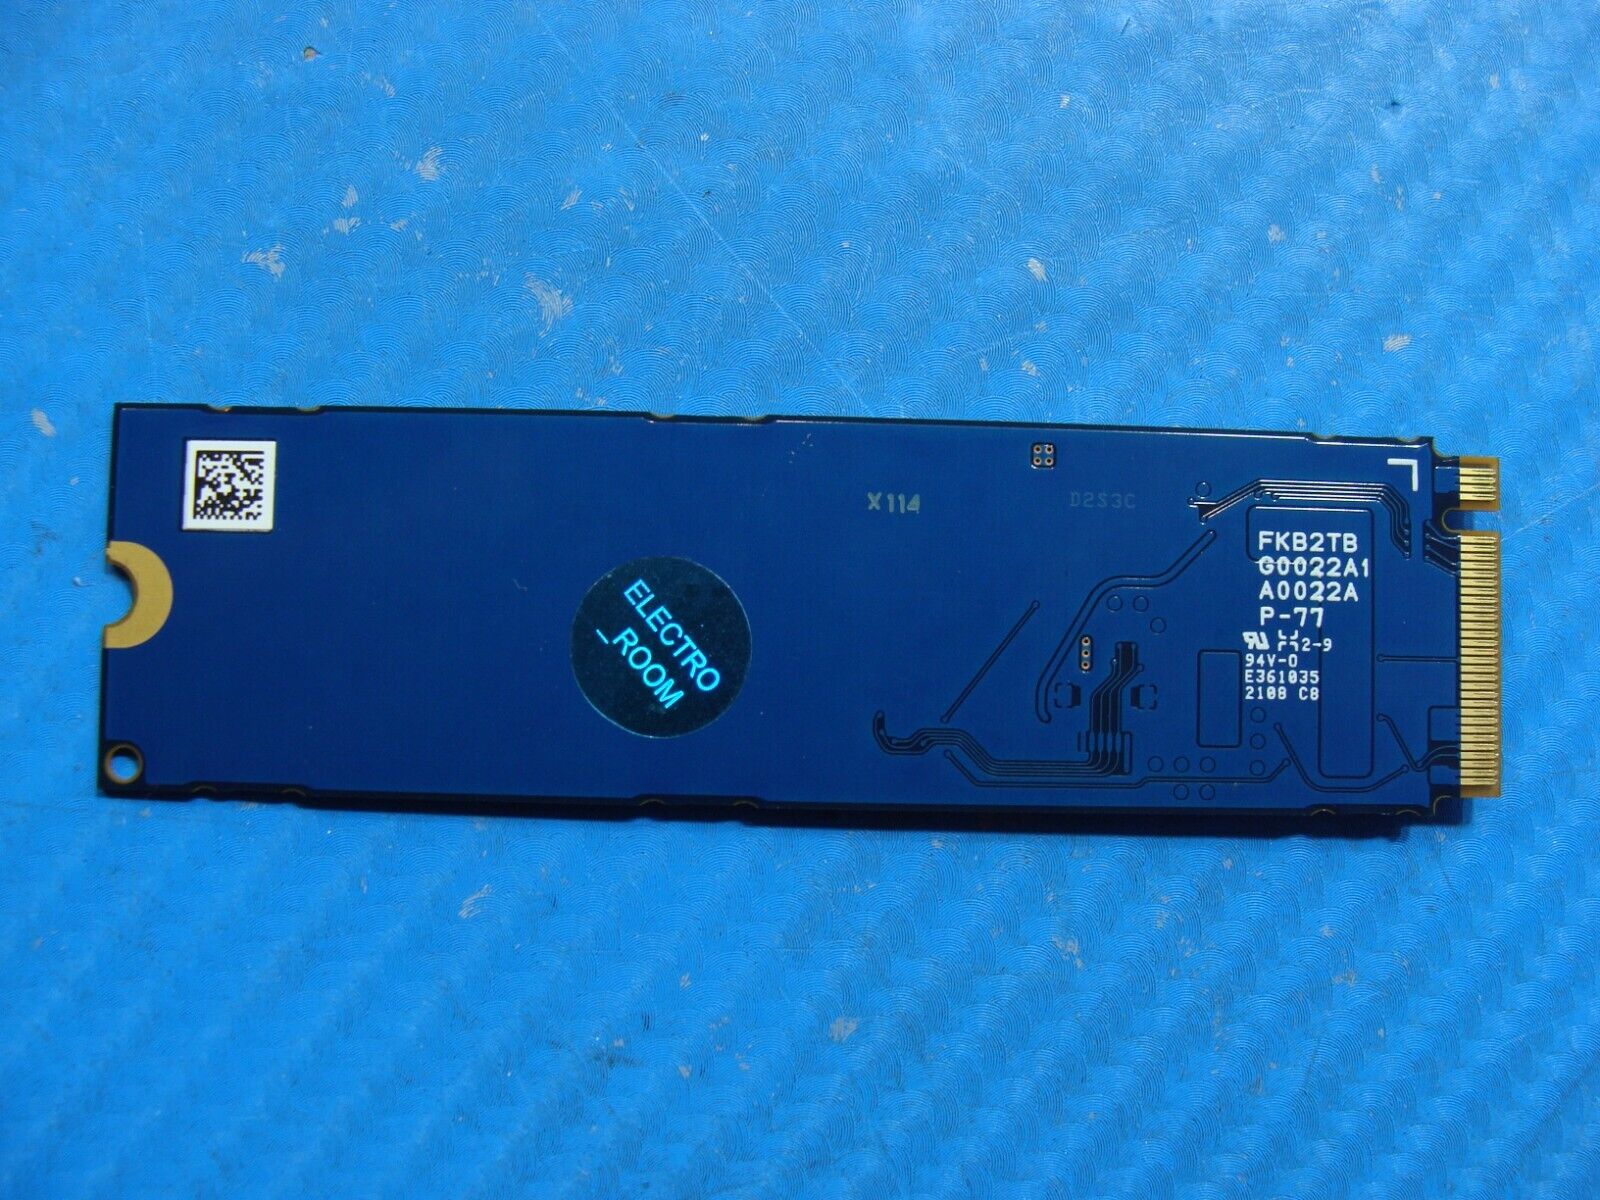 HP 830 G7 Kioxia 256GB NVMe M.2 SSD Solid State Drive KBG40ZNV256G L85354-002